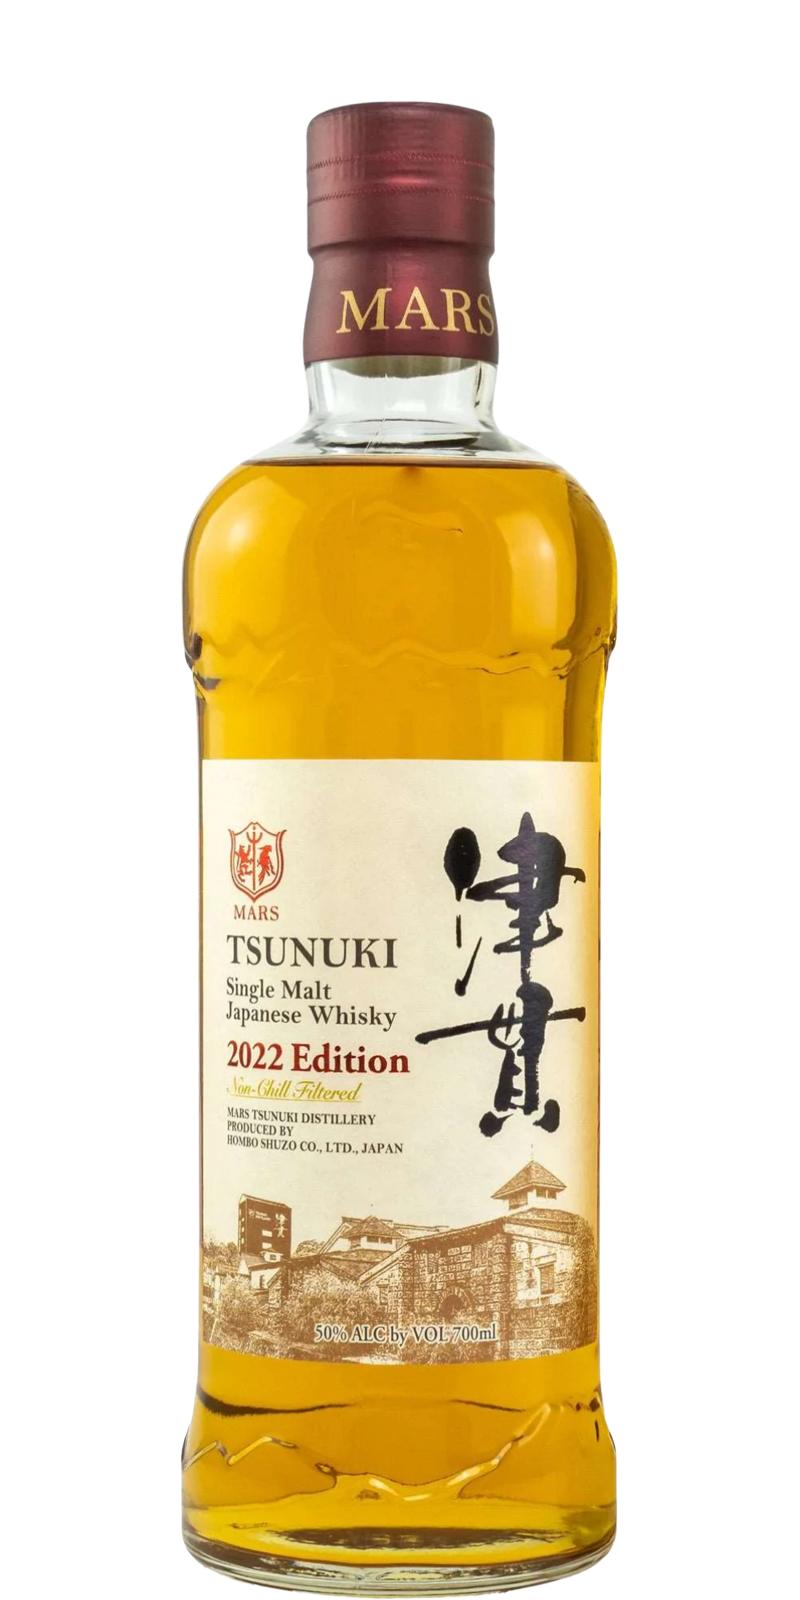 Mars Tsunuki Single Malt Japanese Whisky